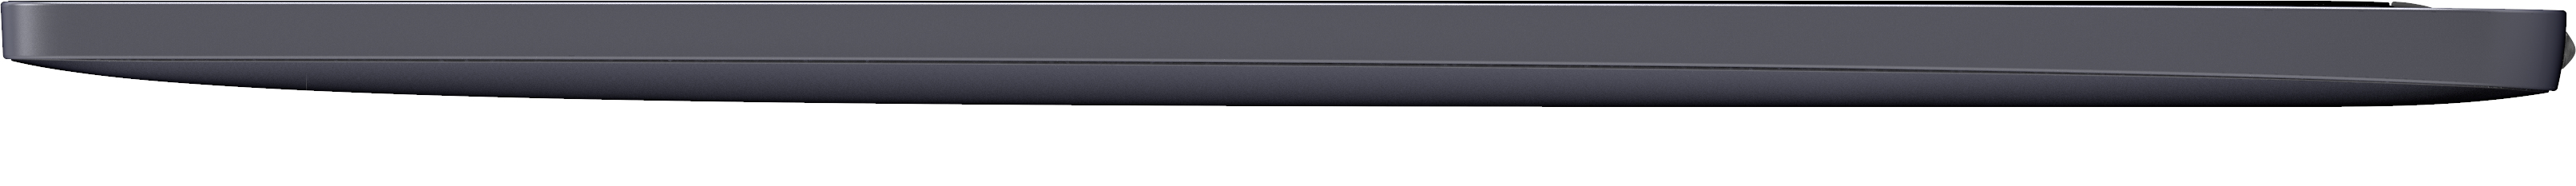 Pocketbook InkPad 3 Pro - metallic grey